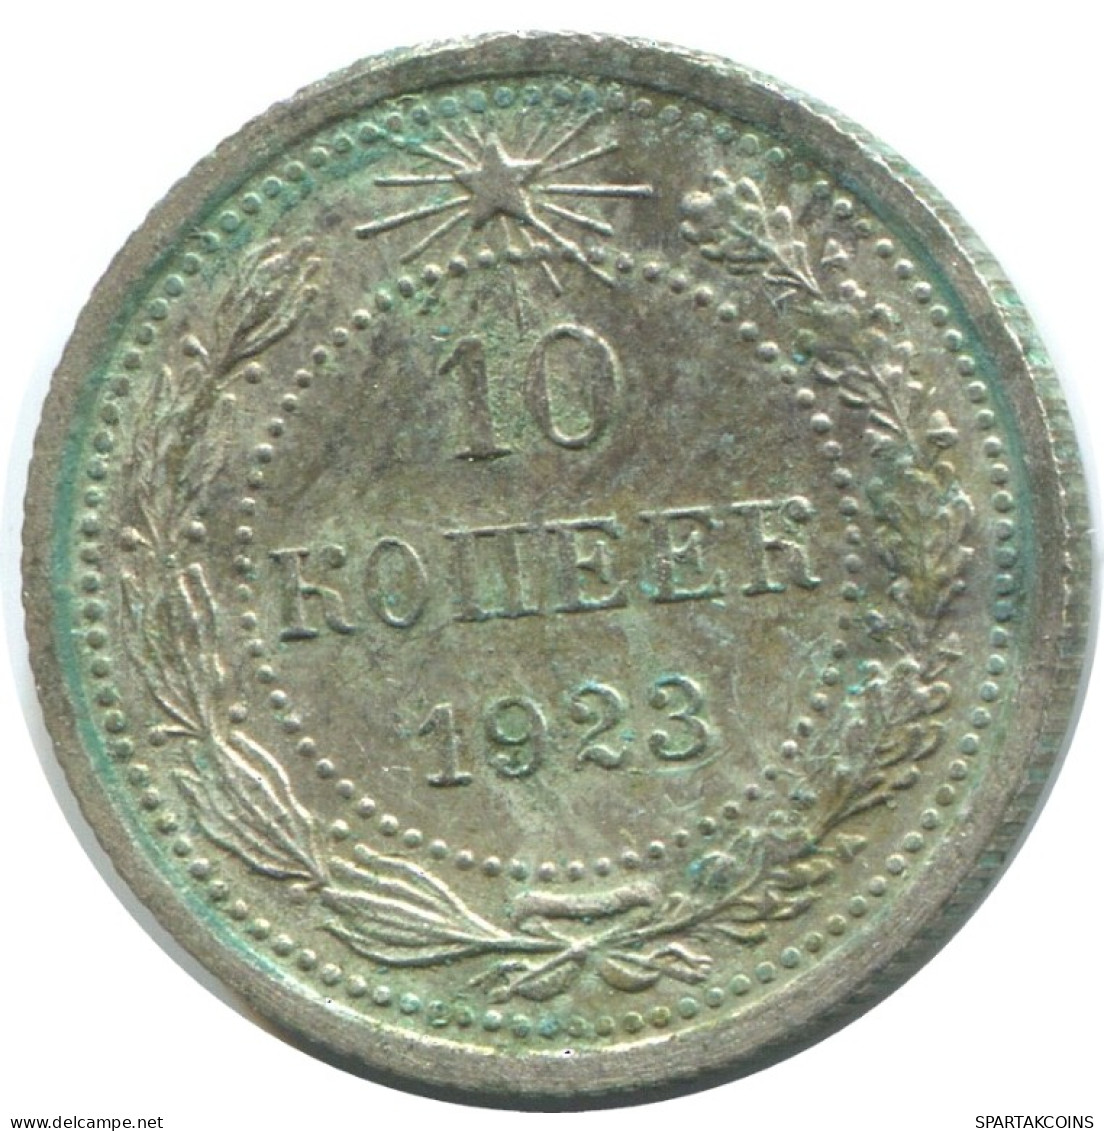 10 KOPEKS 1923 RUSSIA RSFSR SILVER Coin HIGH GRADE #AF012.4.U.A - Russie